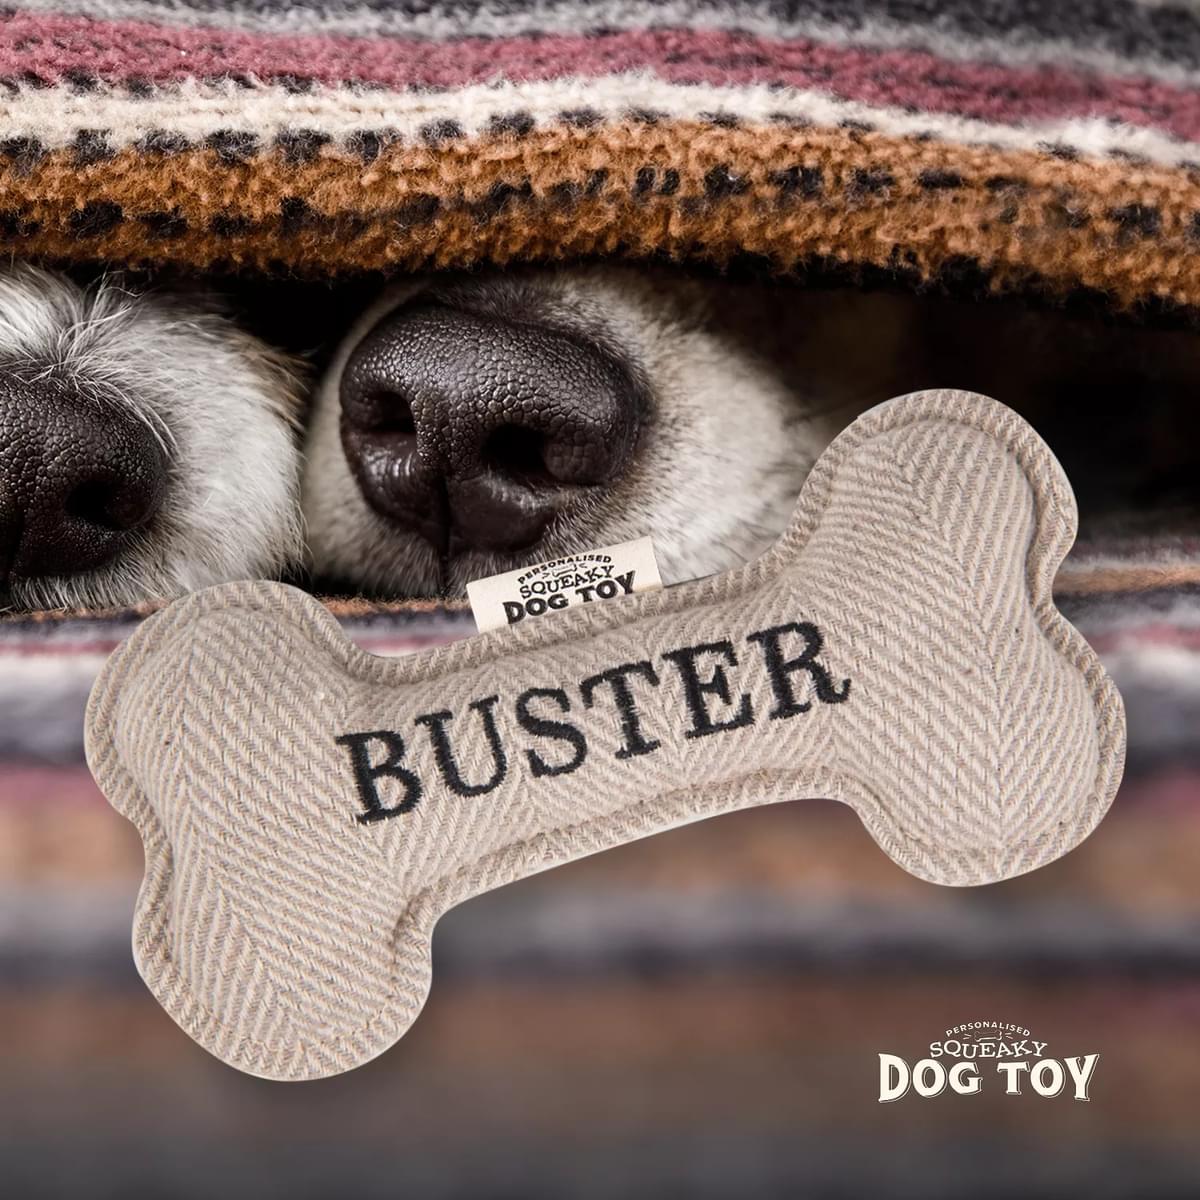 Named Squeaky Dog Toy-Buster . Bone shaped herringbone tweed pattern dog toy. 